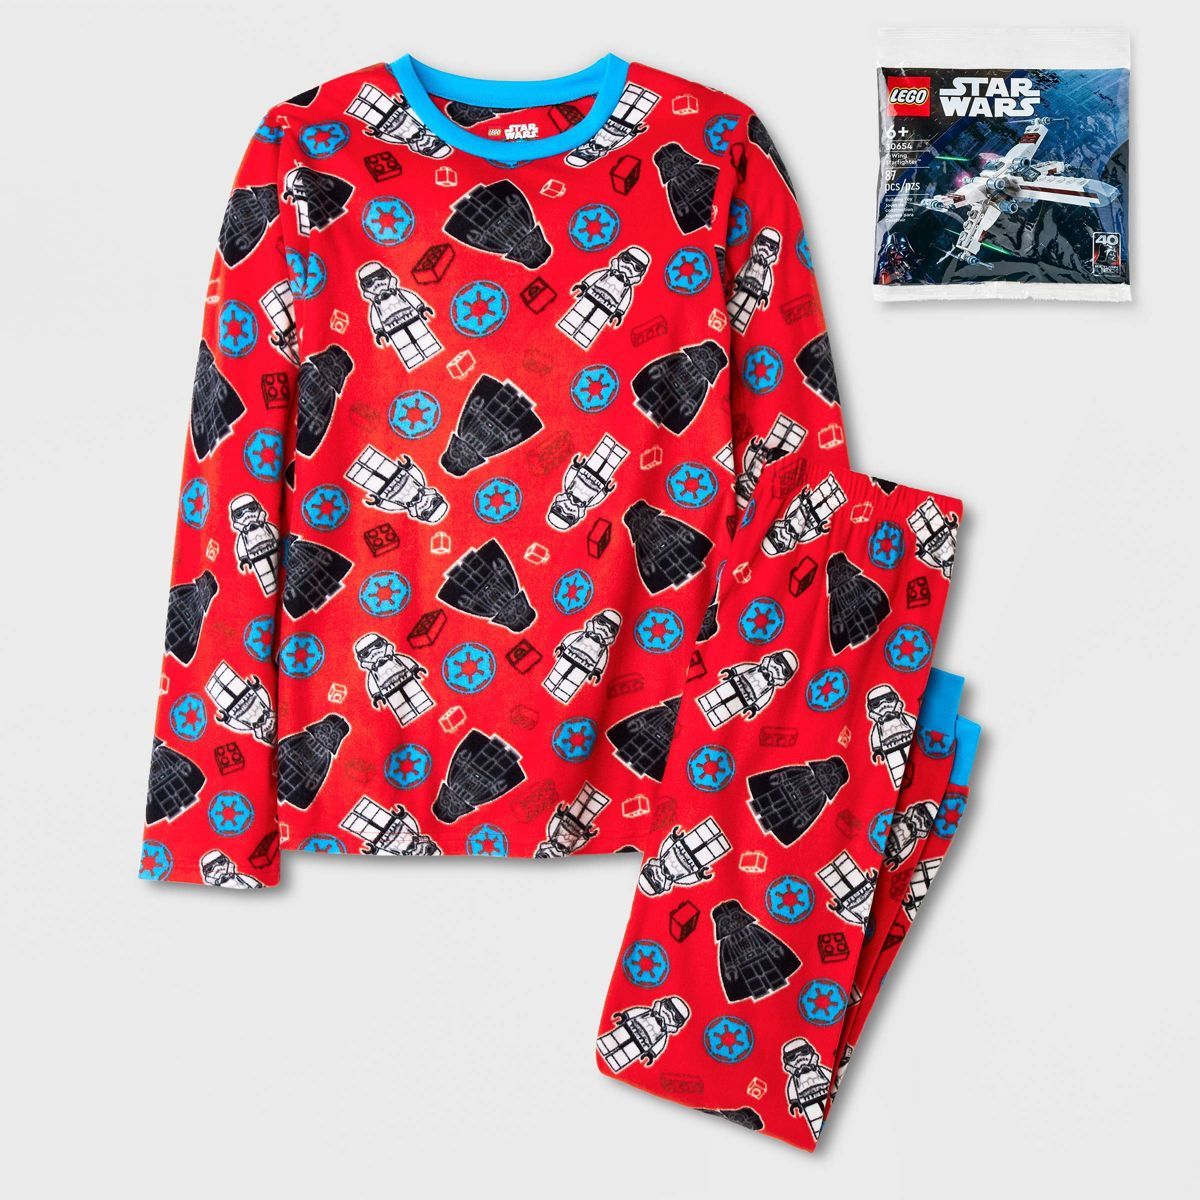 Boys' LEGO Star Wars Pajama Set with LEGO Creator 30654 - Red | Target